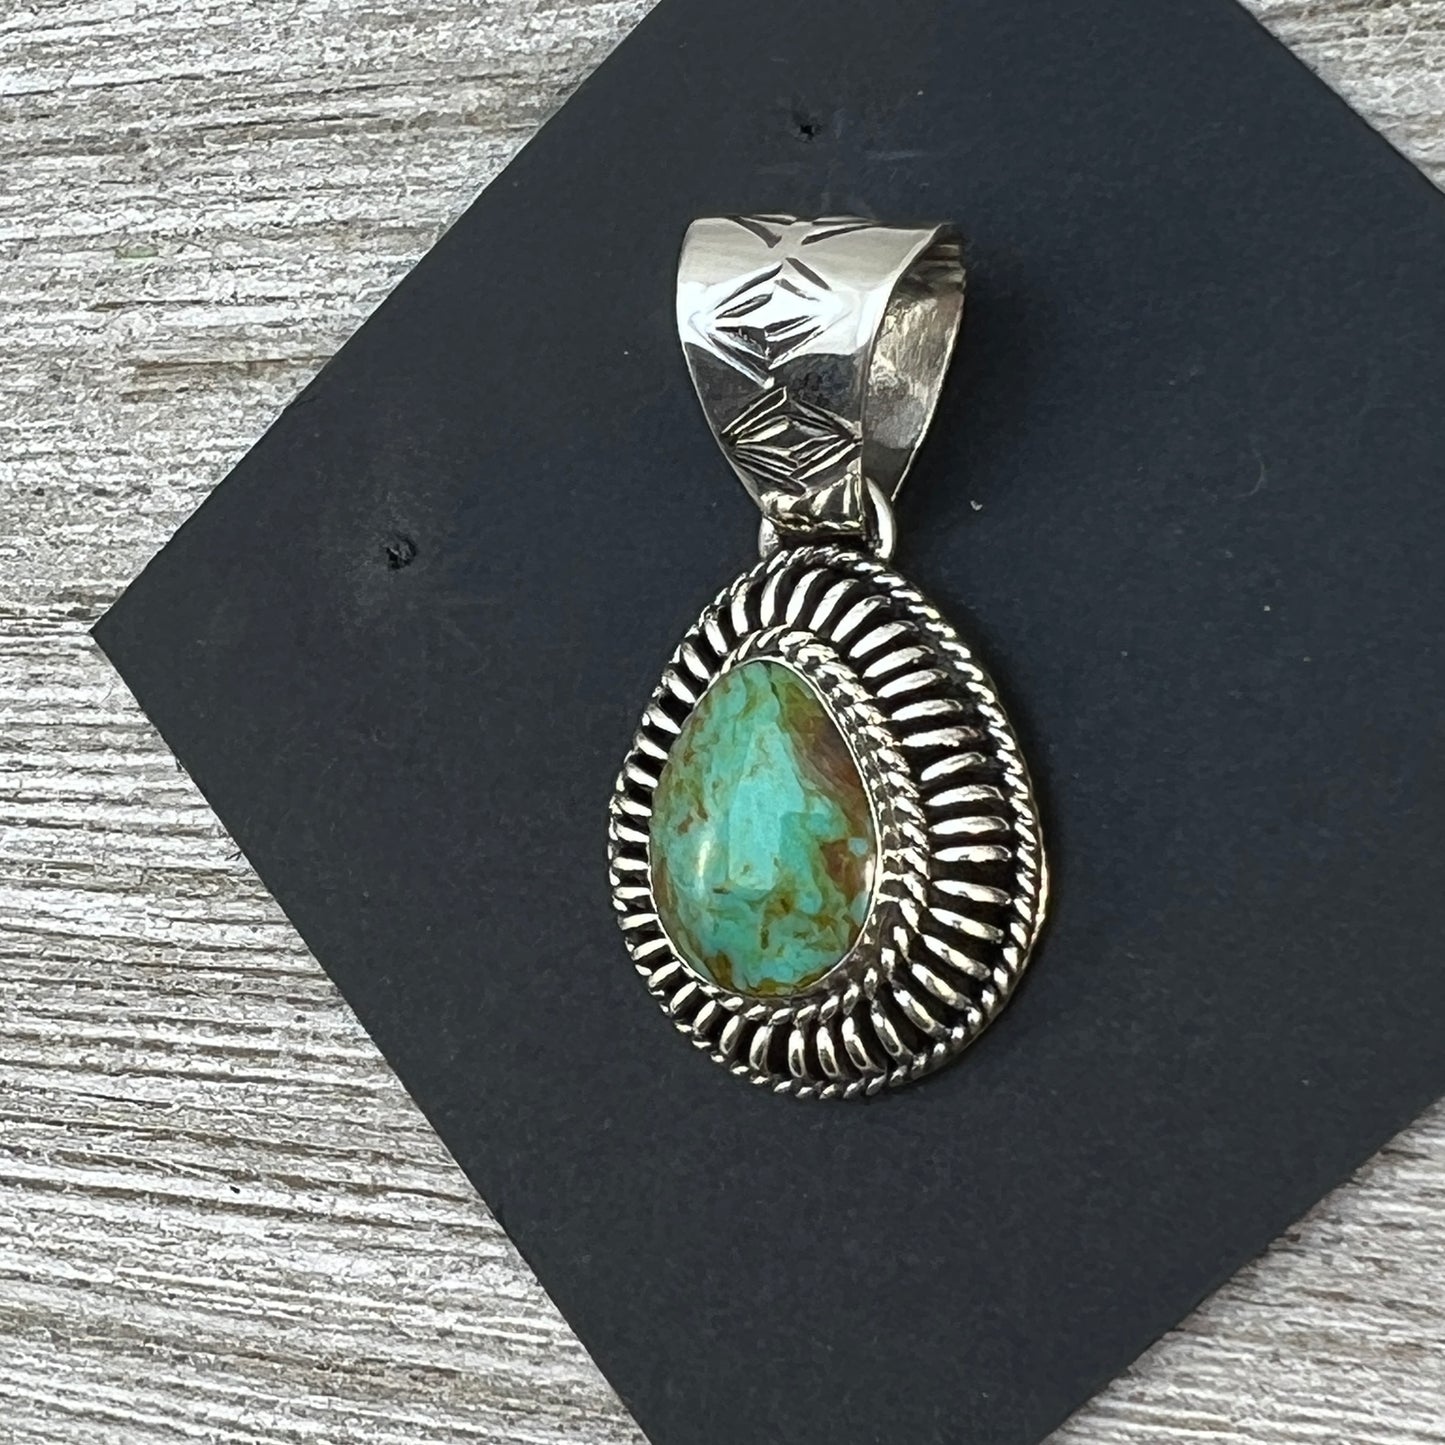 Kingman teardrop turquoise pendant #4, Navajo handmade Phyllis Smith, signed sterling silver